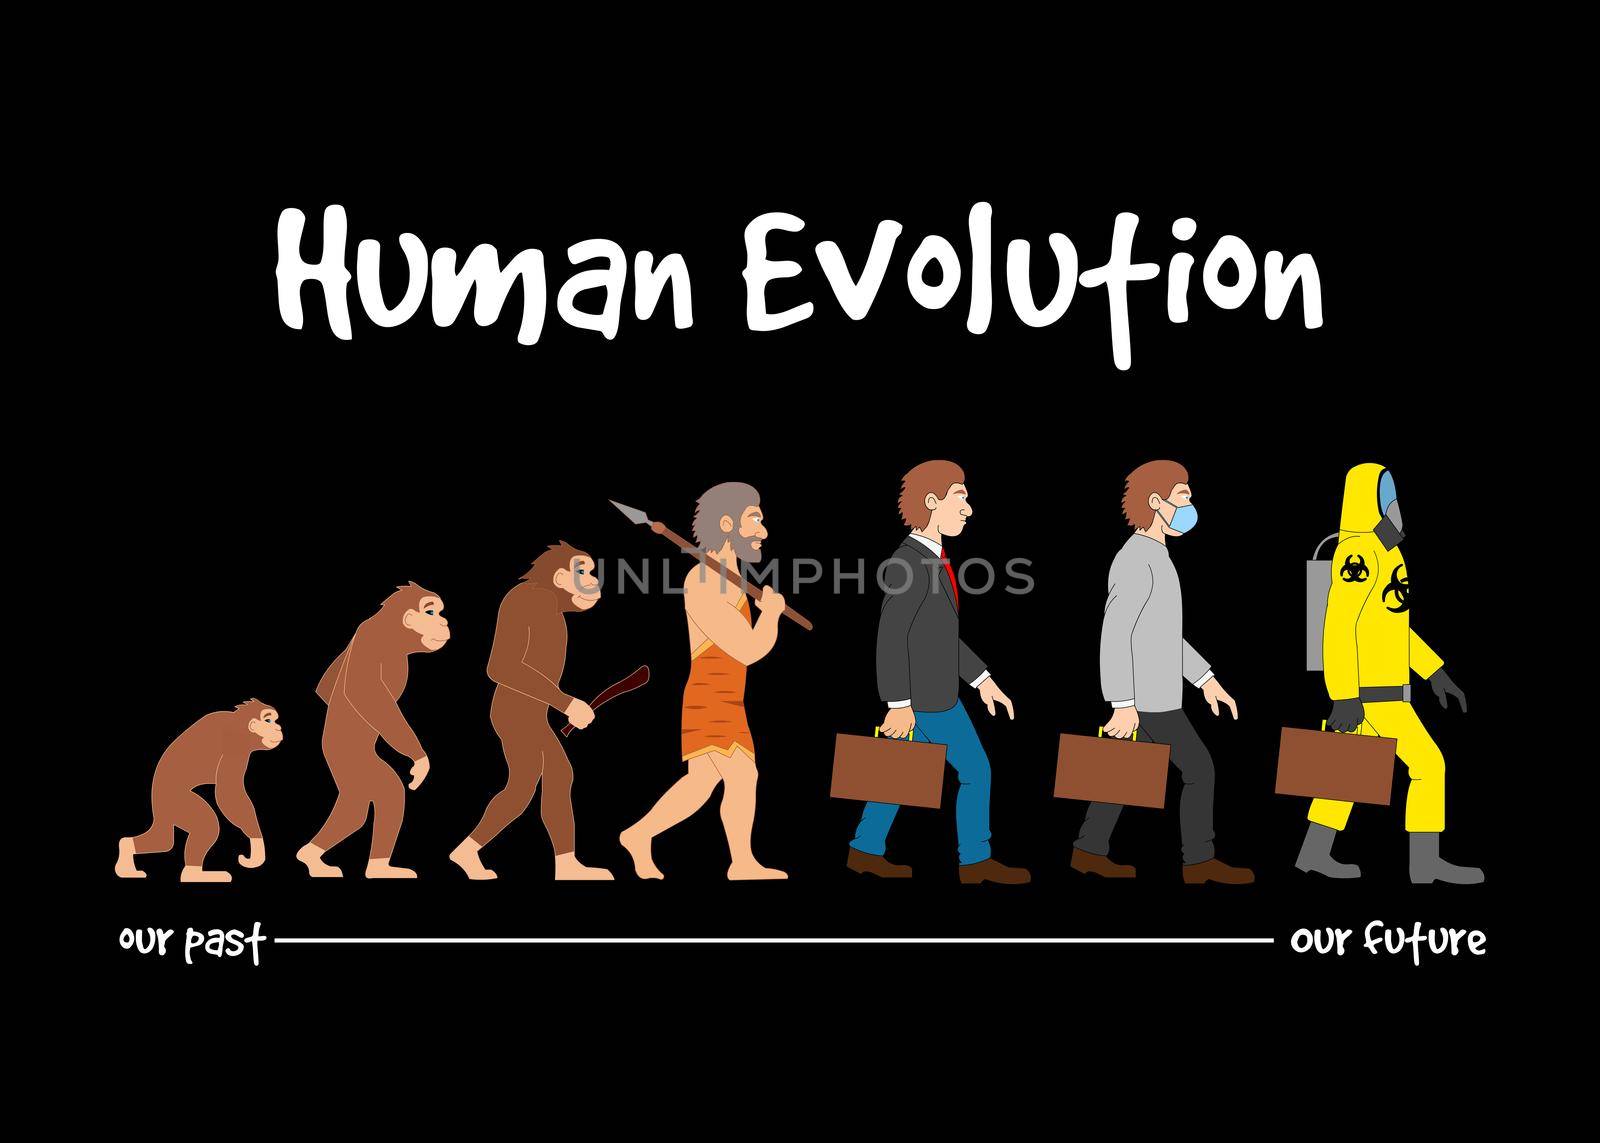 Evolution - past to future